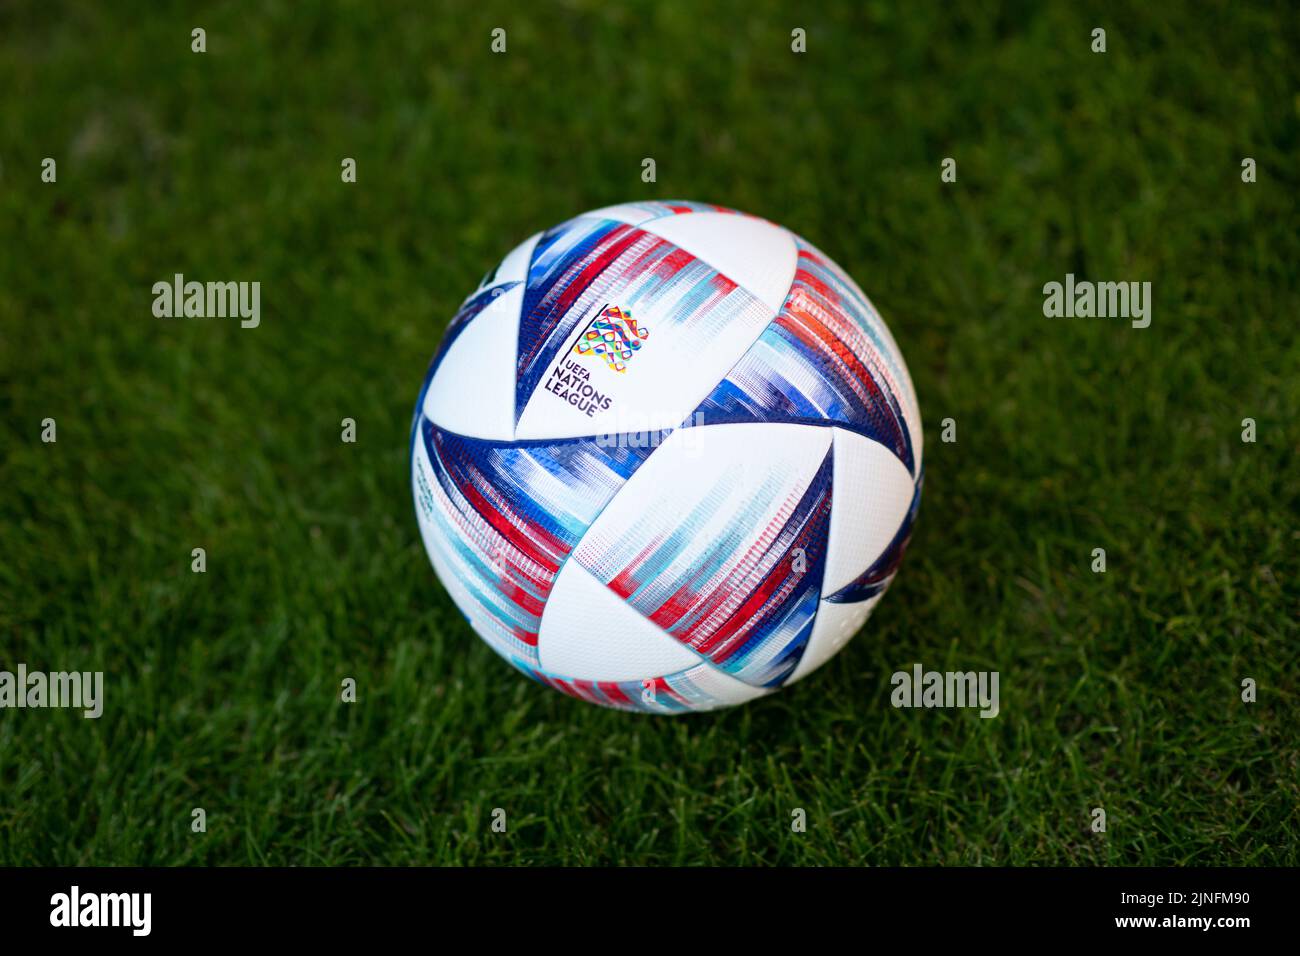 ADIDAS 22-23 UEFA NATIONS LEAGUE BALL Stockfoto